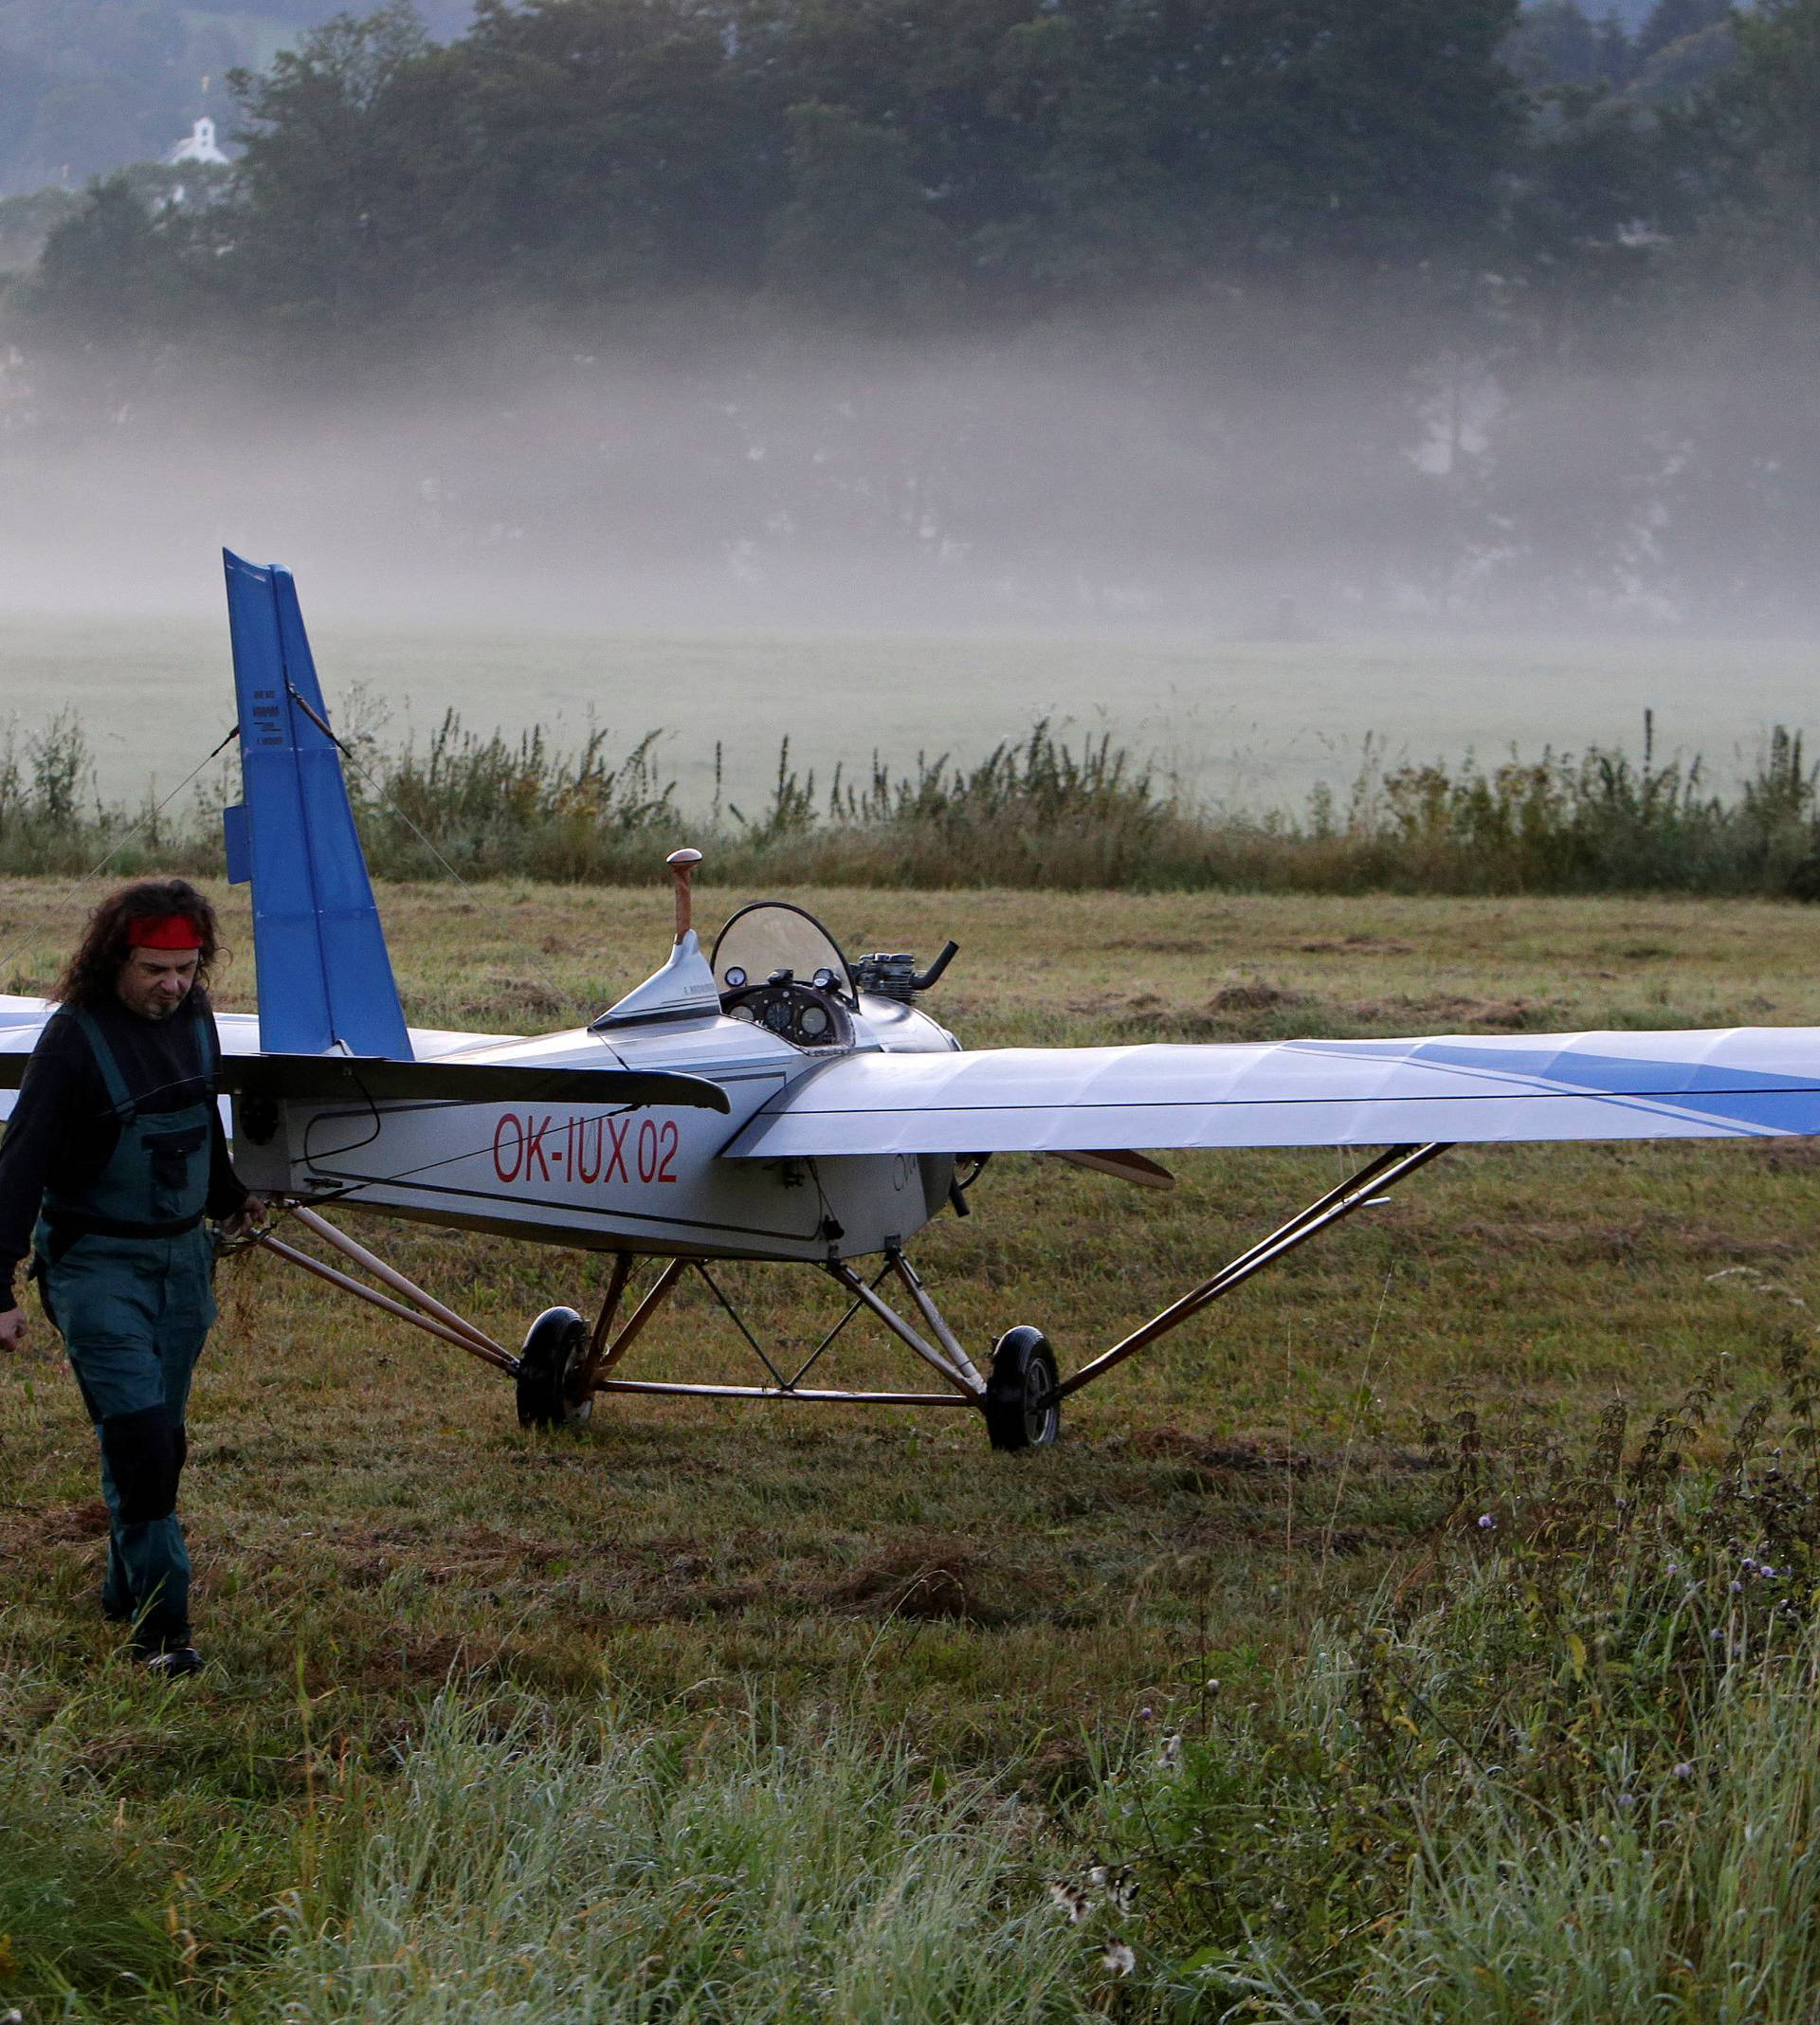 Aviator Frantisek Hadrava pulls Vampira, an ultralight plane based on the U.S.-design of light planes called Mini-Max, on a field near the town of Ckyne